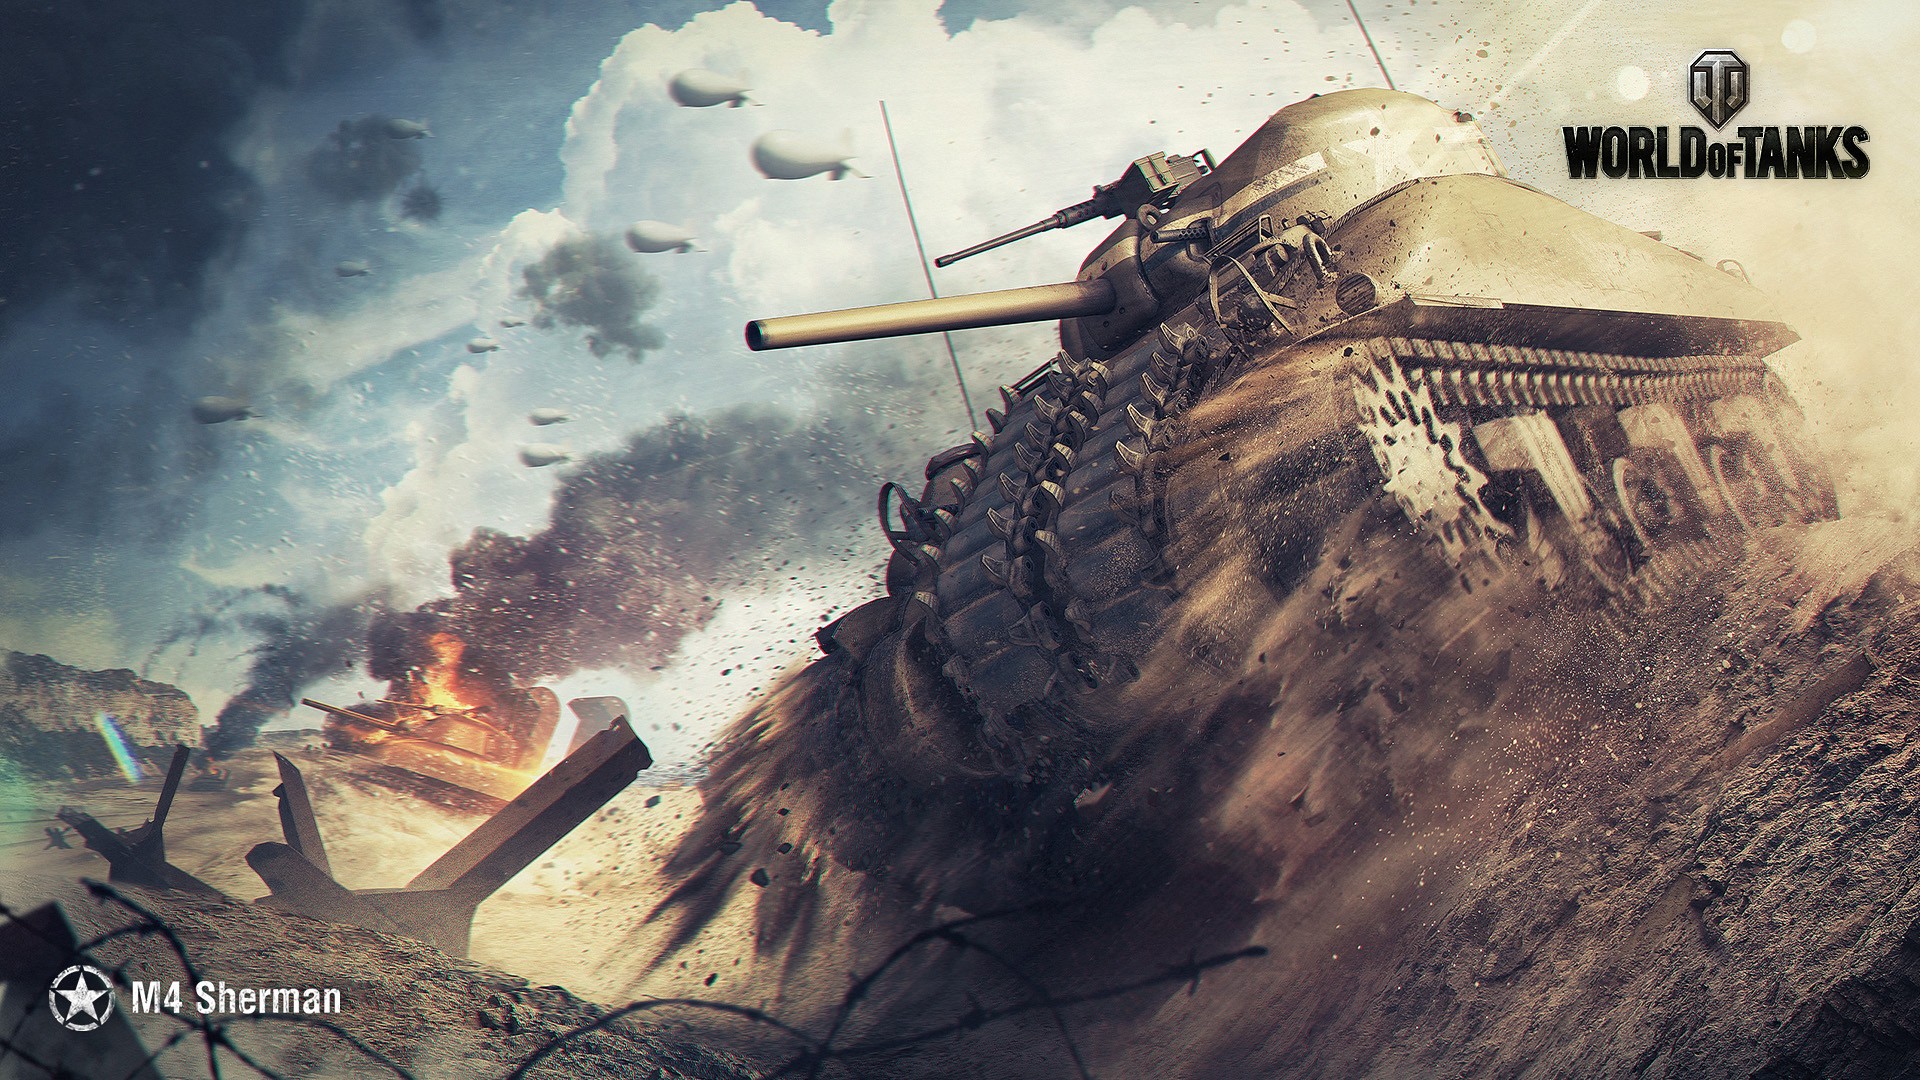 General 1920x1080 tank video game art video games M4 Sherman military military vehicle vehicle PC gaming